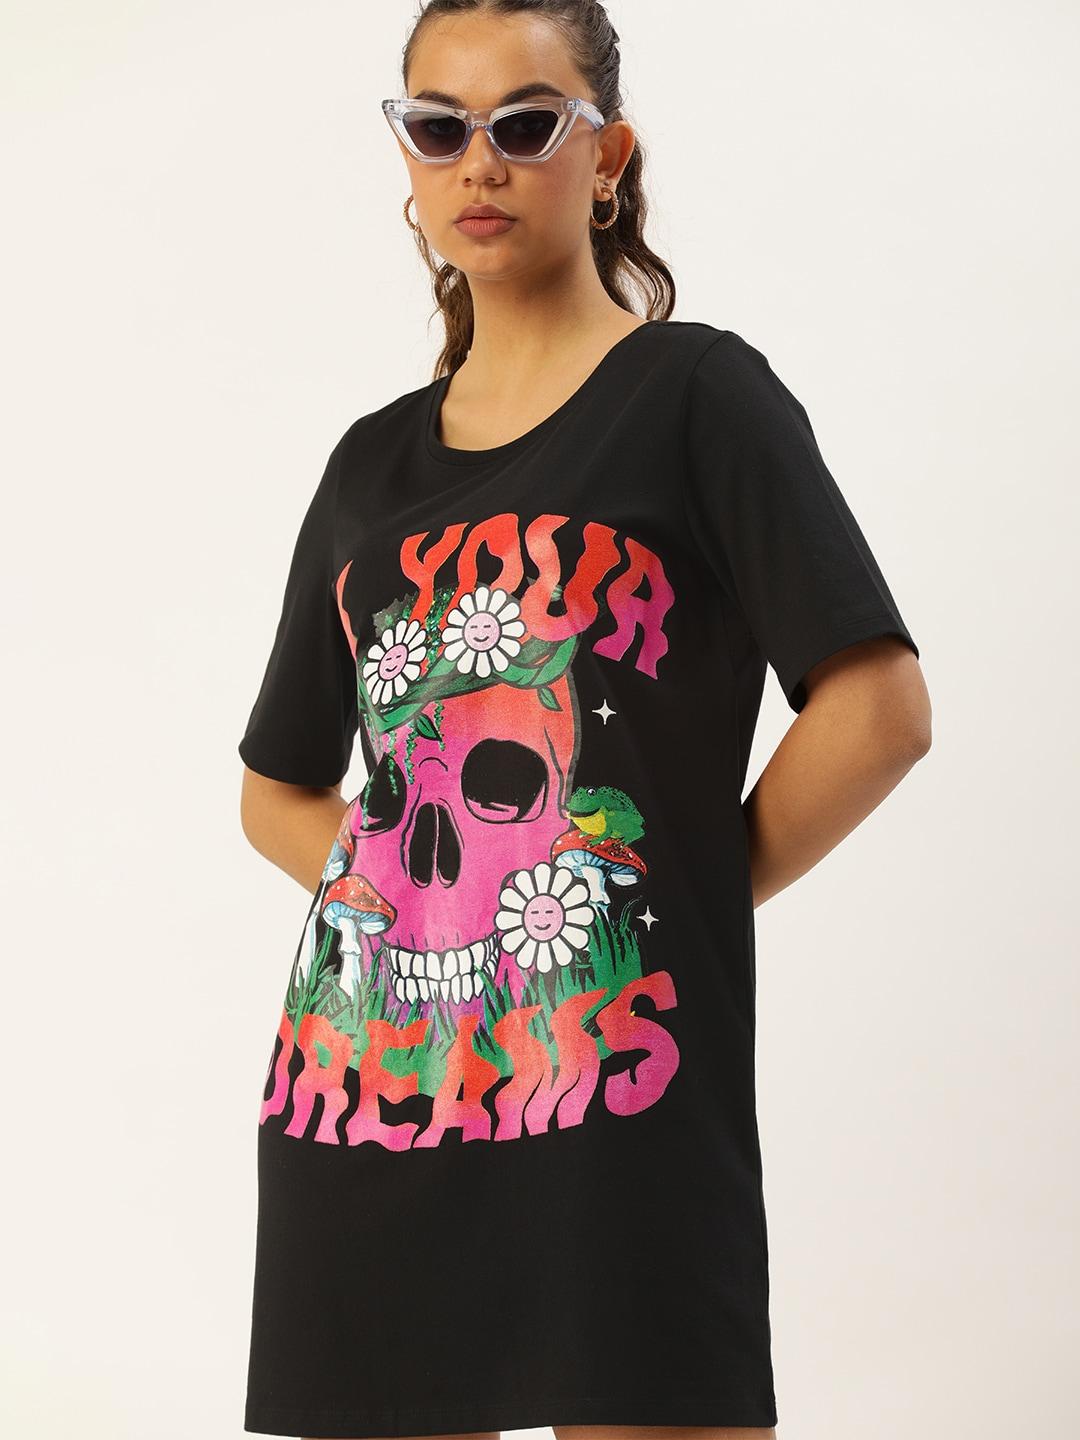 kook n keech black & pink graphic printed t-shirt mini dress